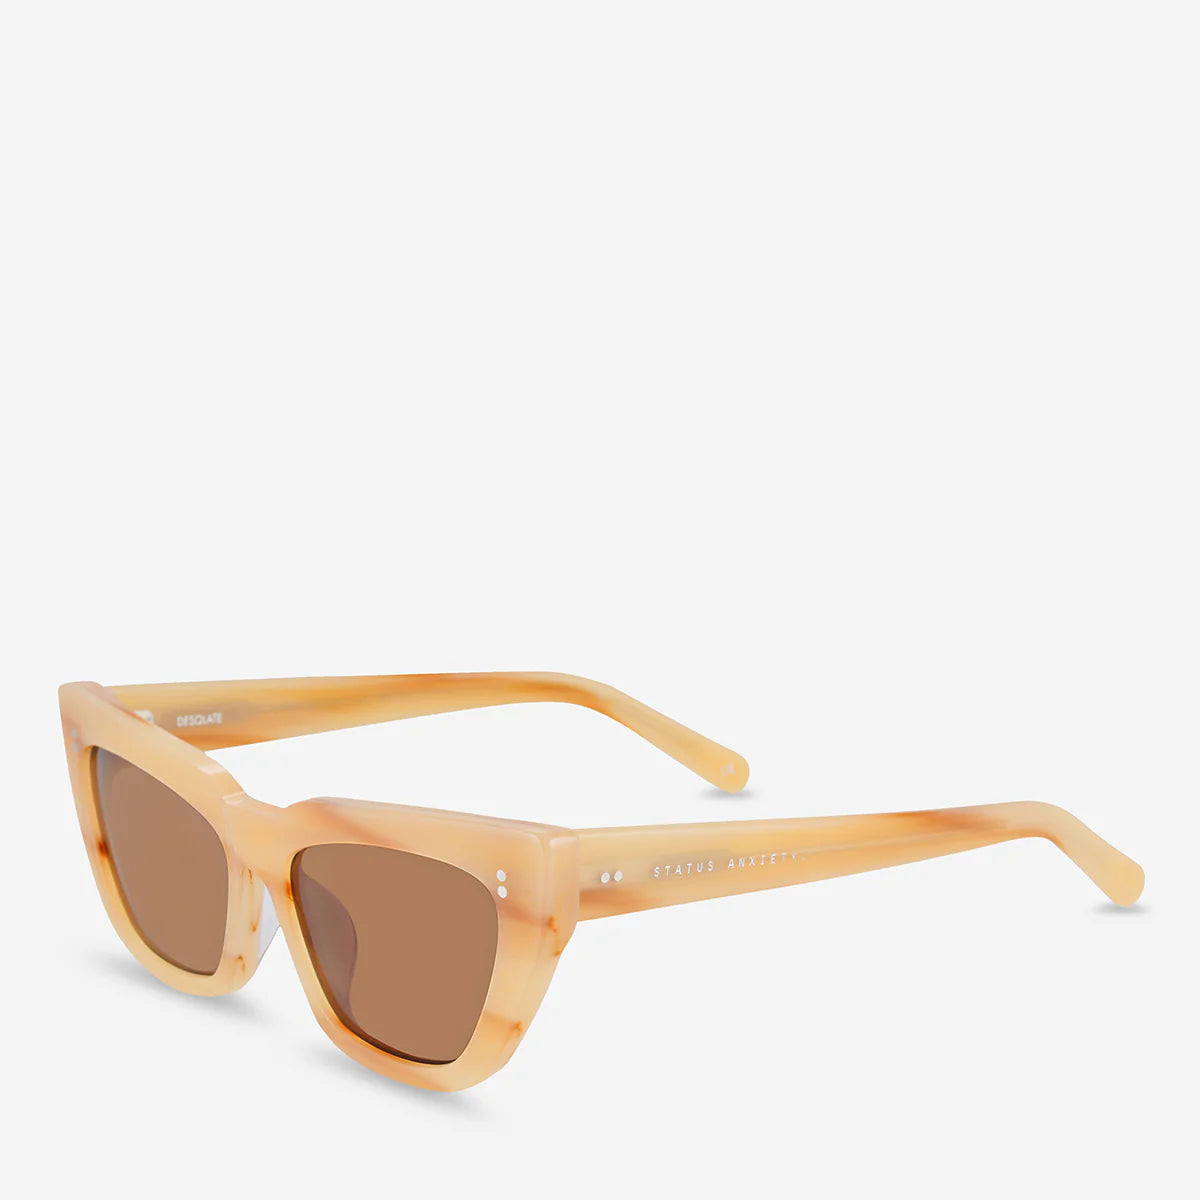 Desolate Sunglasses in Blonde